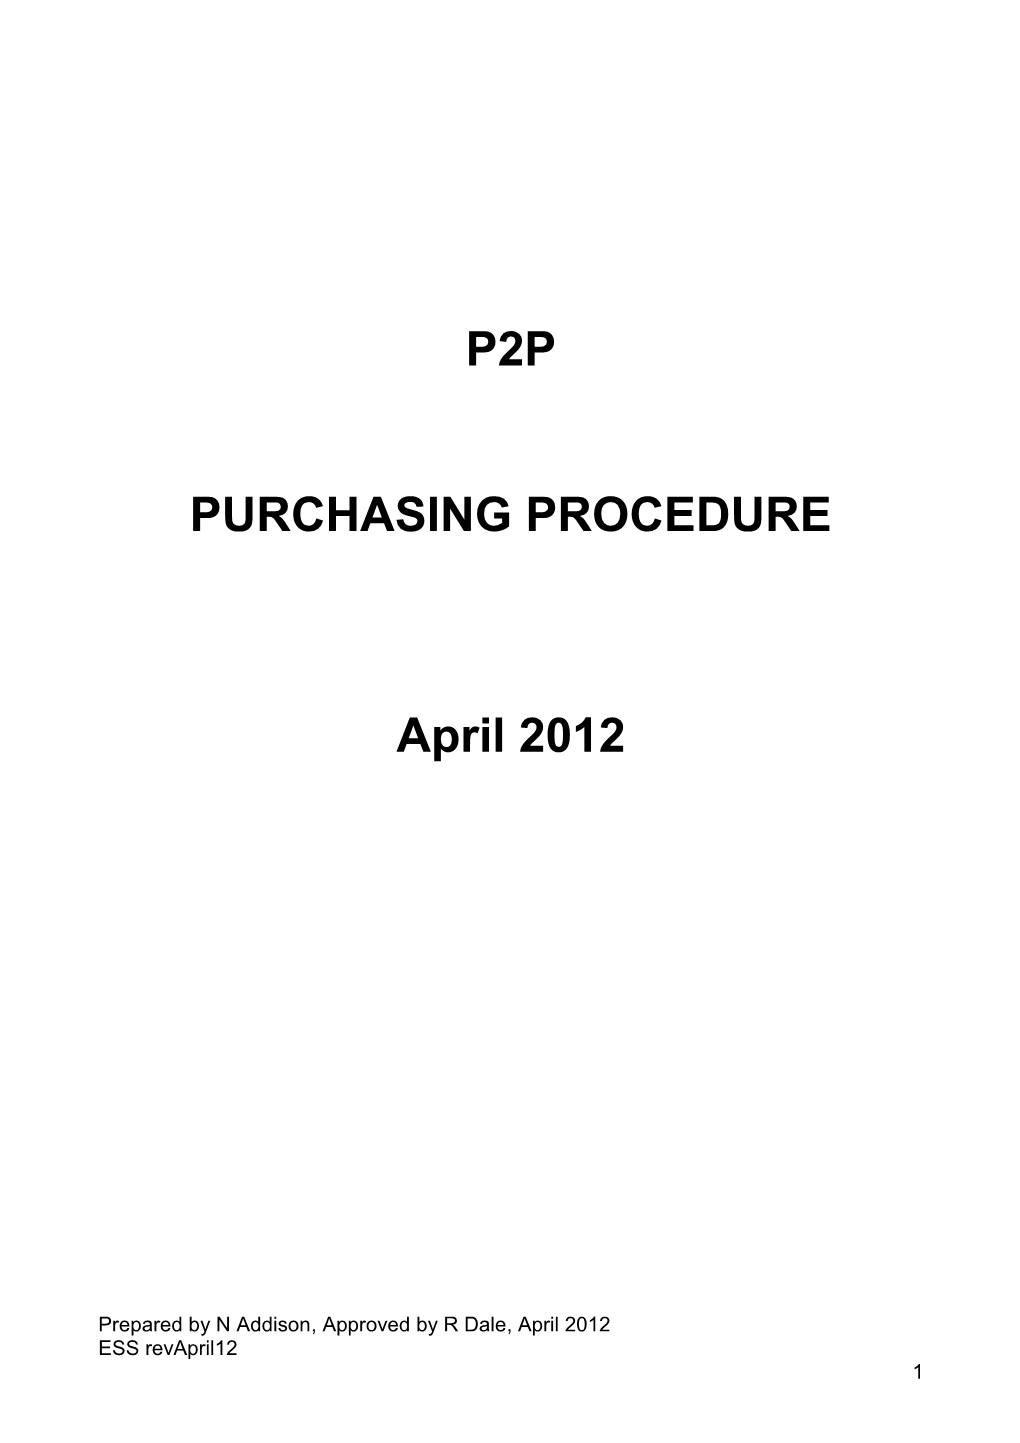 Purchasing Procedure